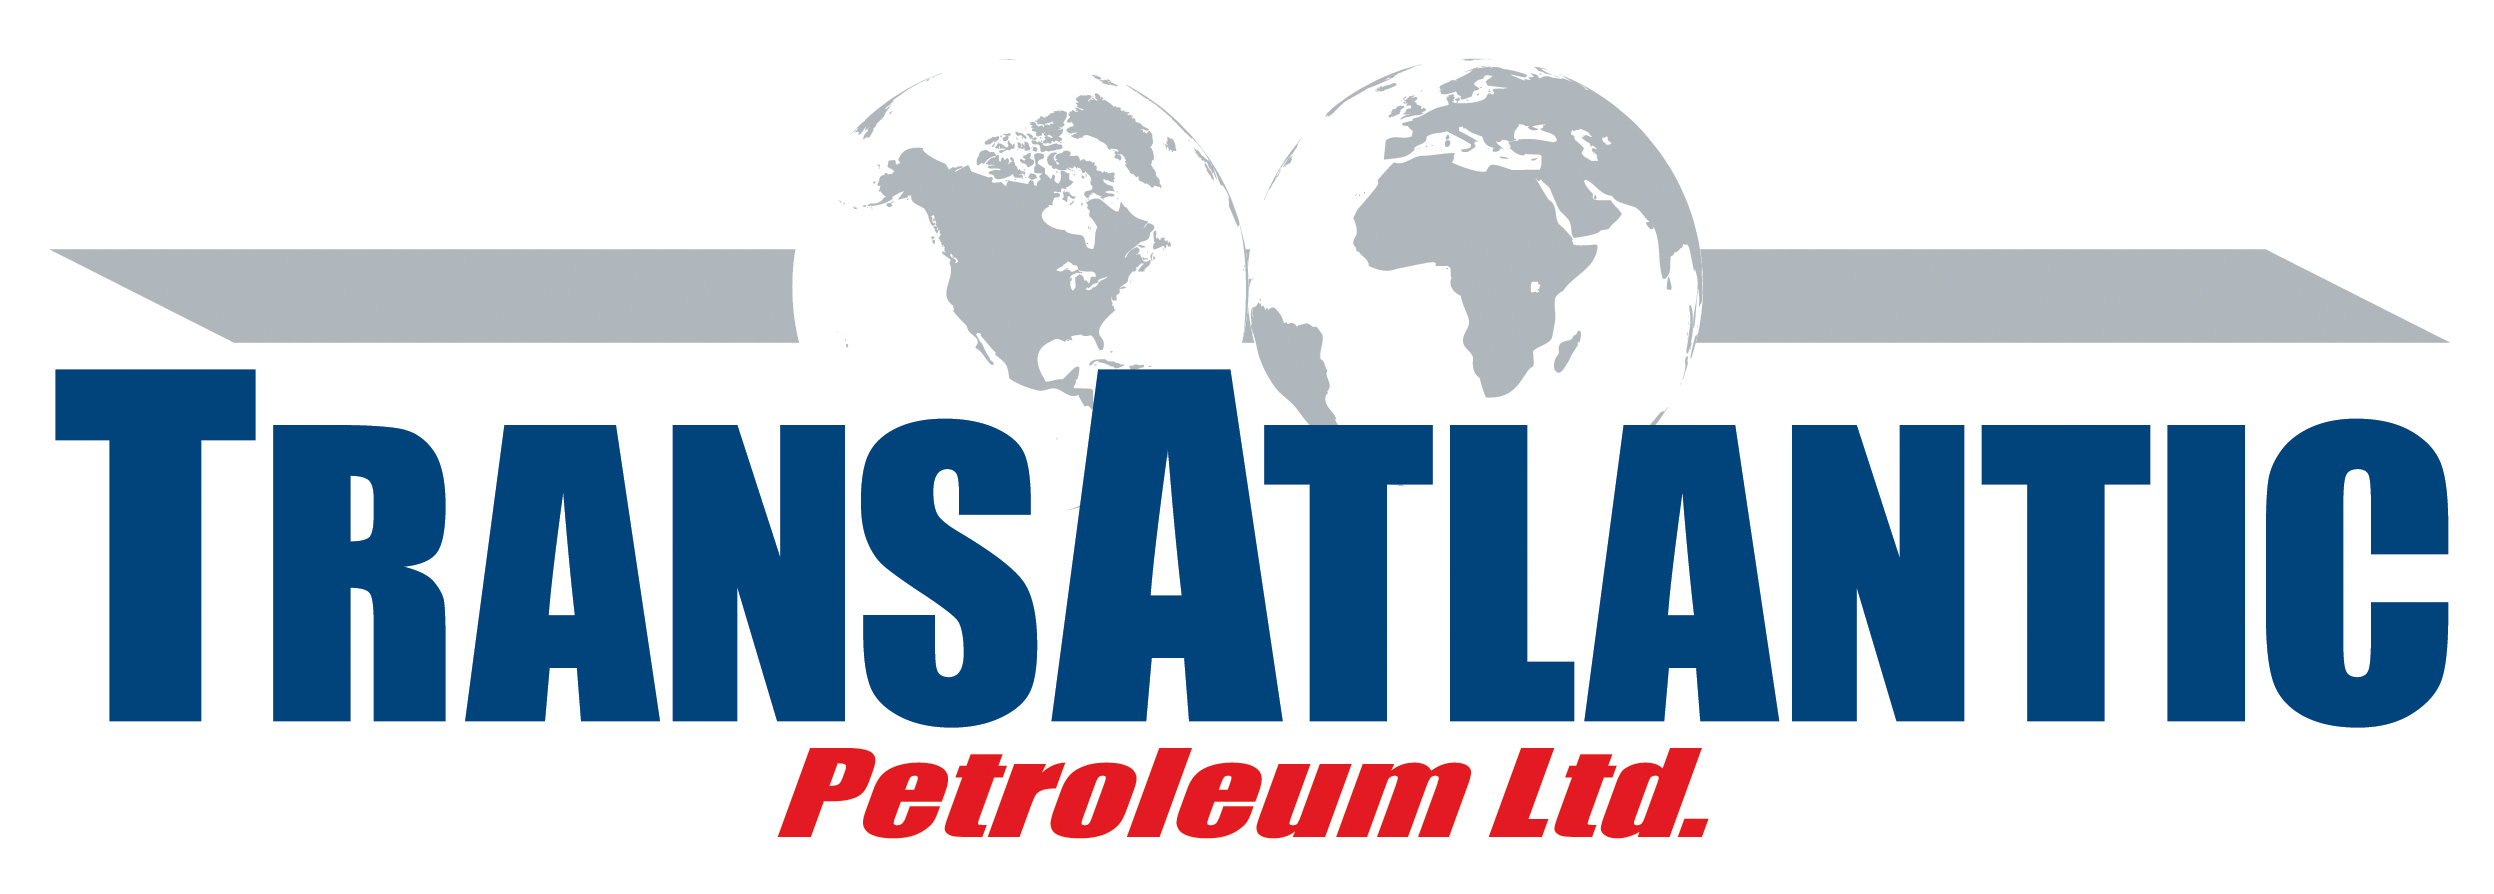 TransAtlantic Petroleum Ltd. Logo